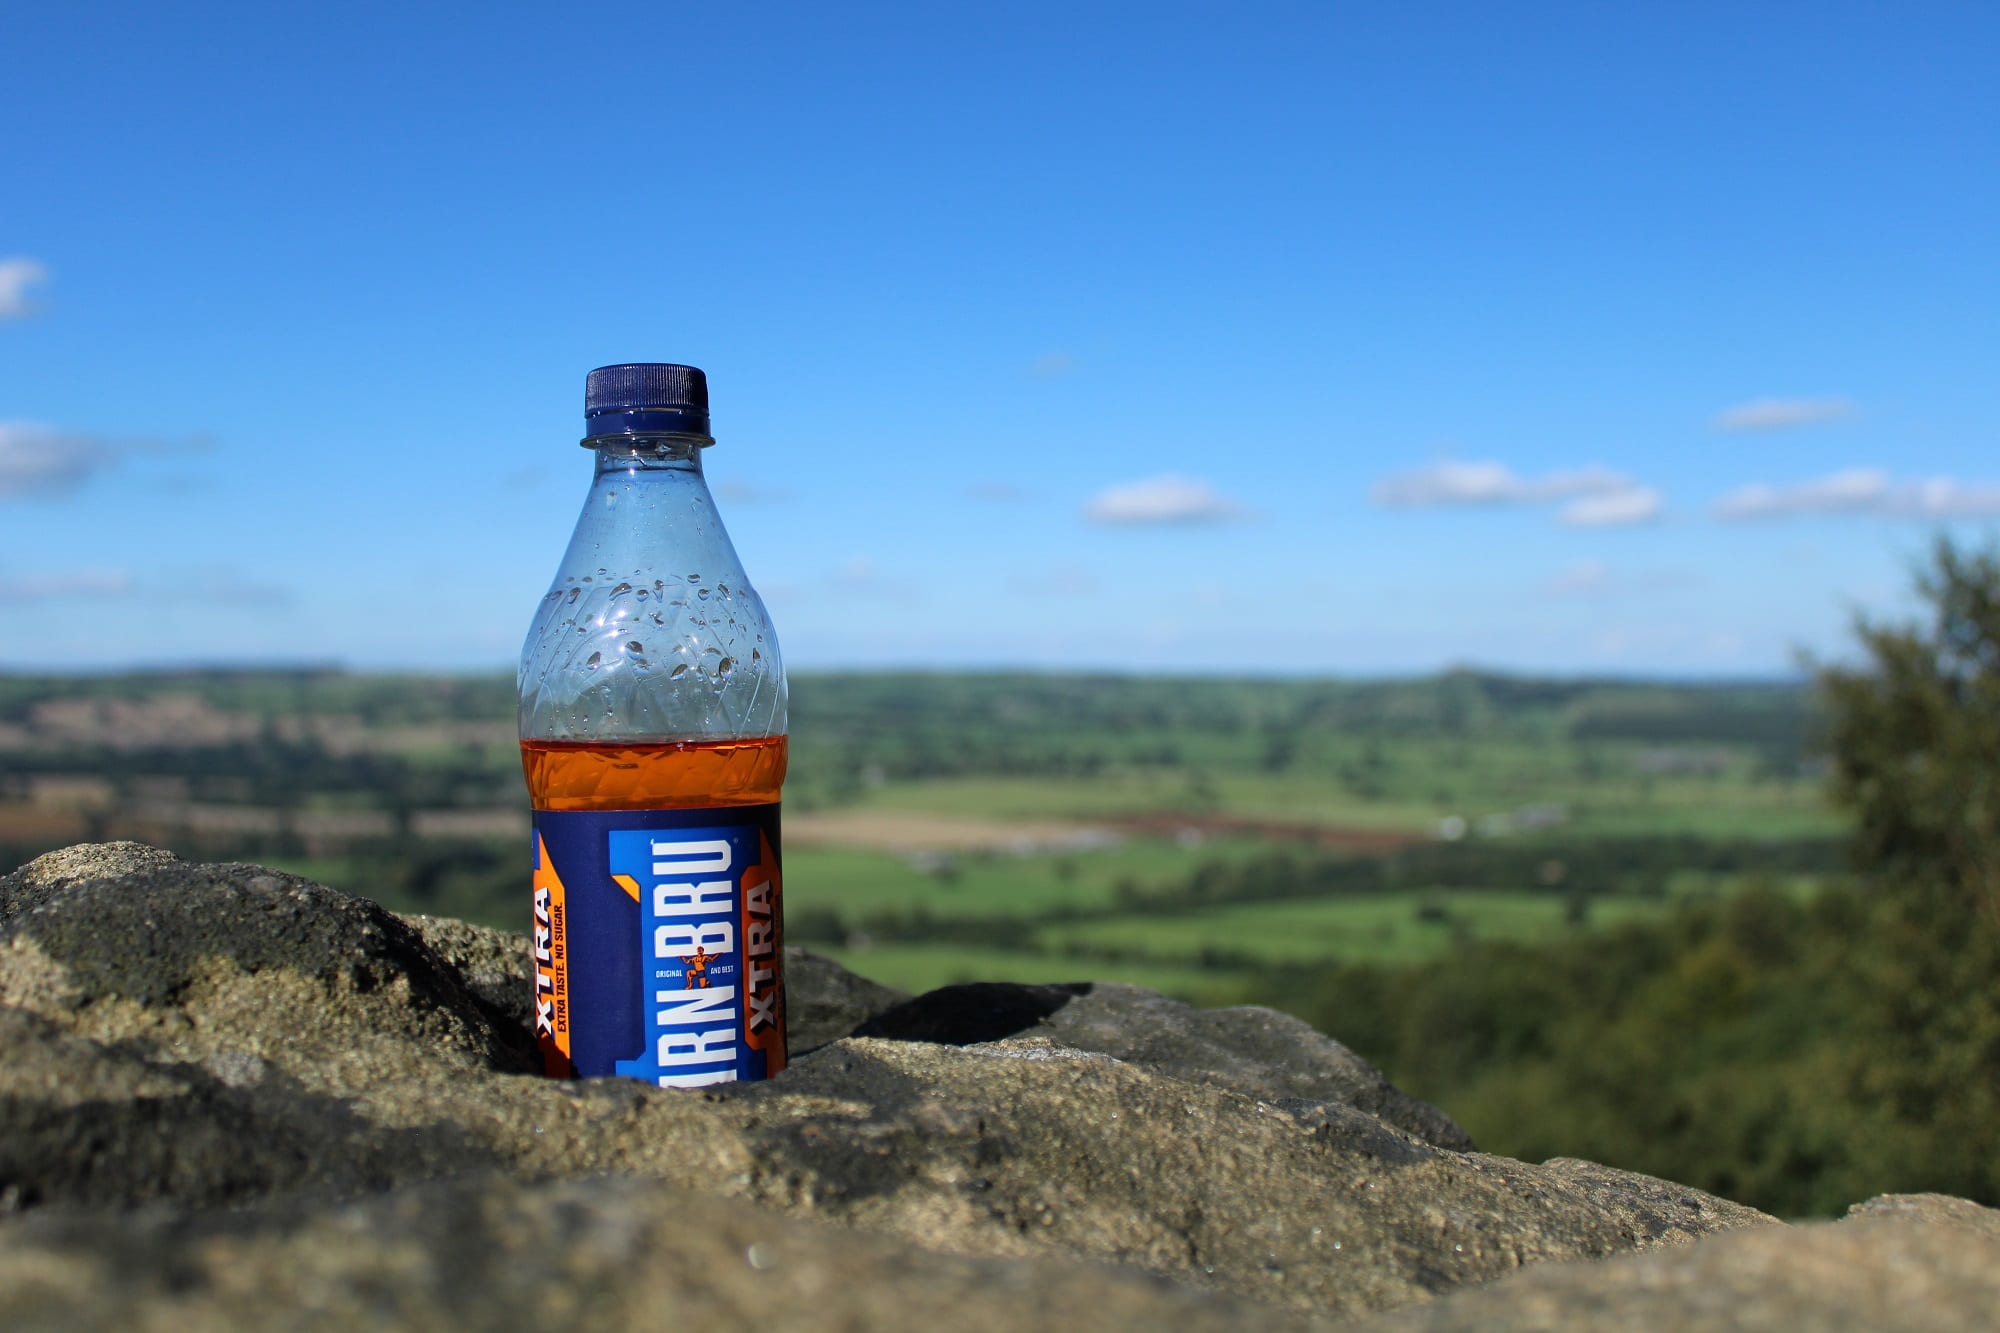 irn-bru-bottle-sat-on-bottle-with-hills-in-background